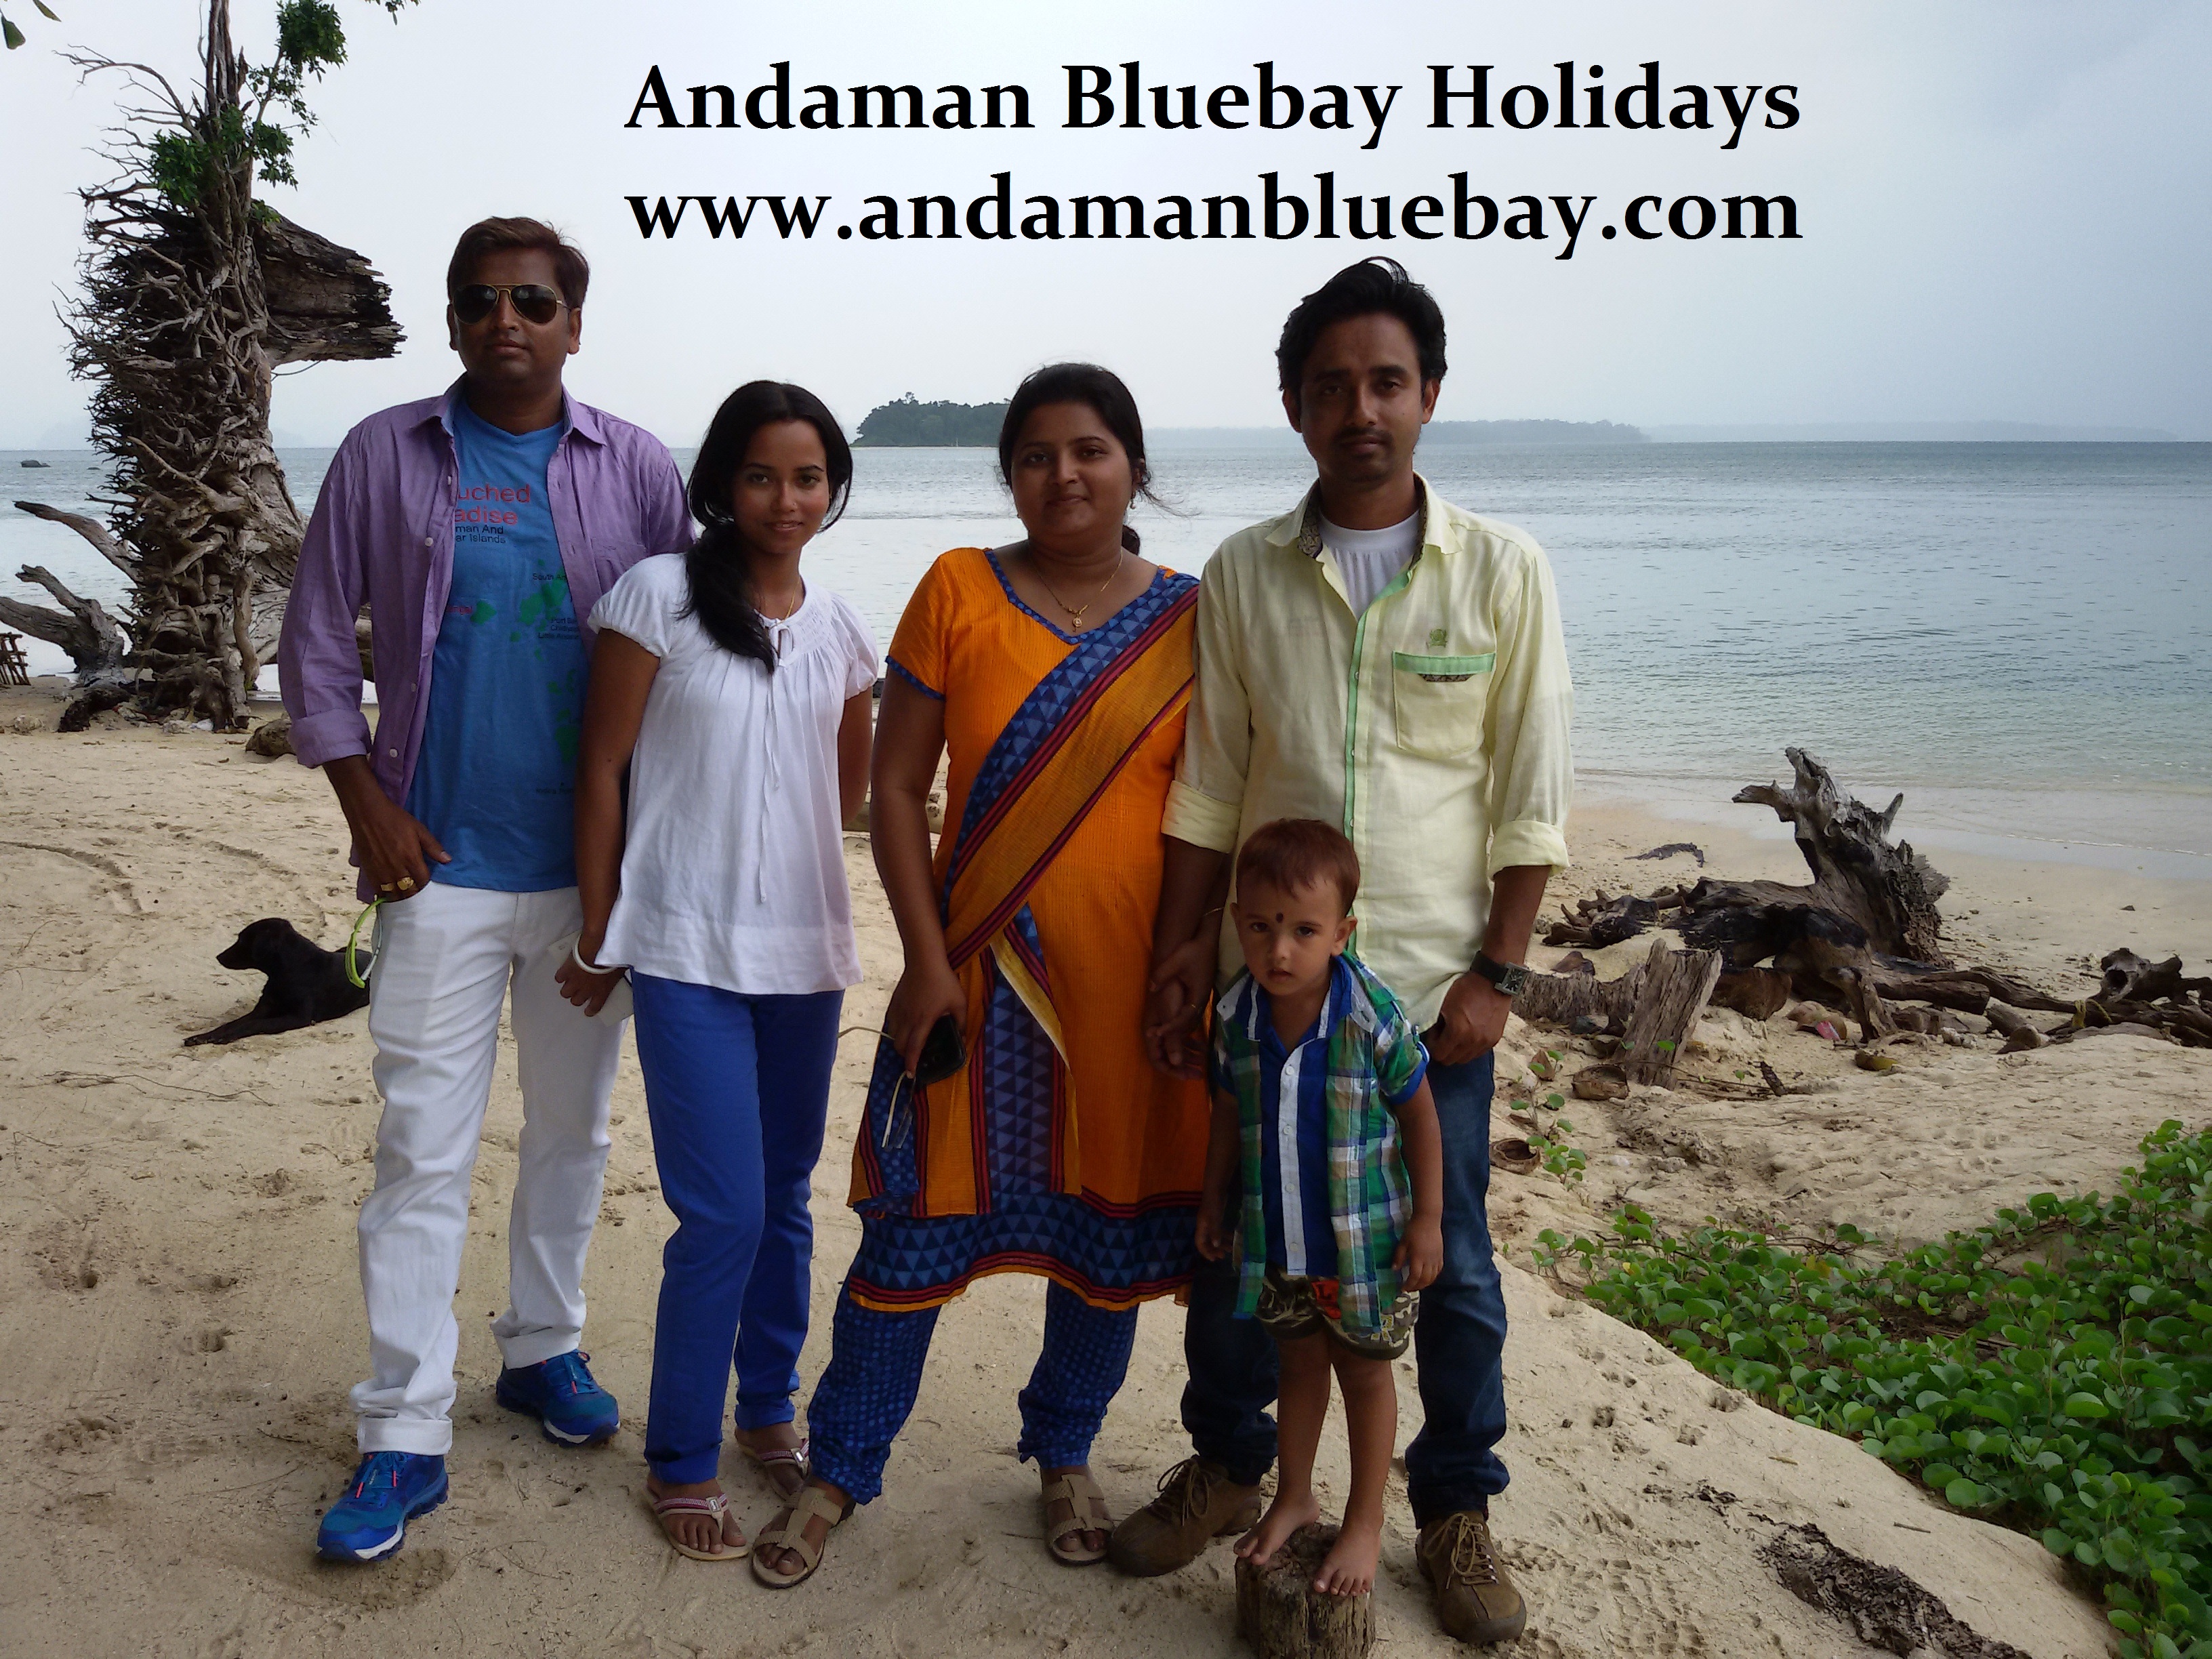 andaman_bluebay_holidays_clients_www_andamanbluebay_com-2804885